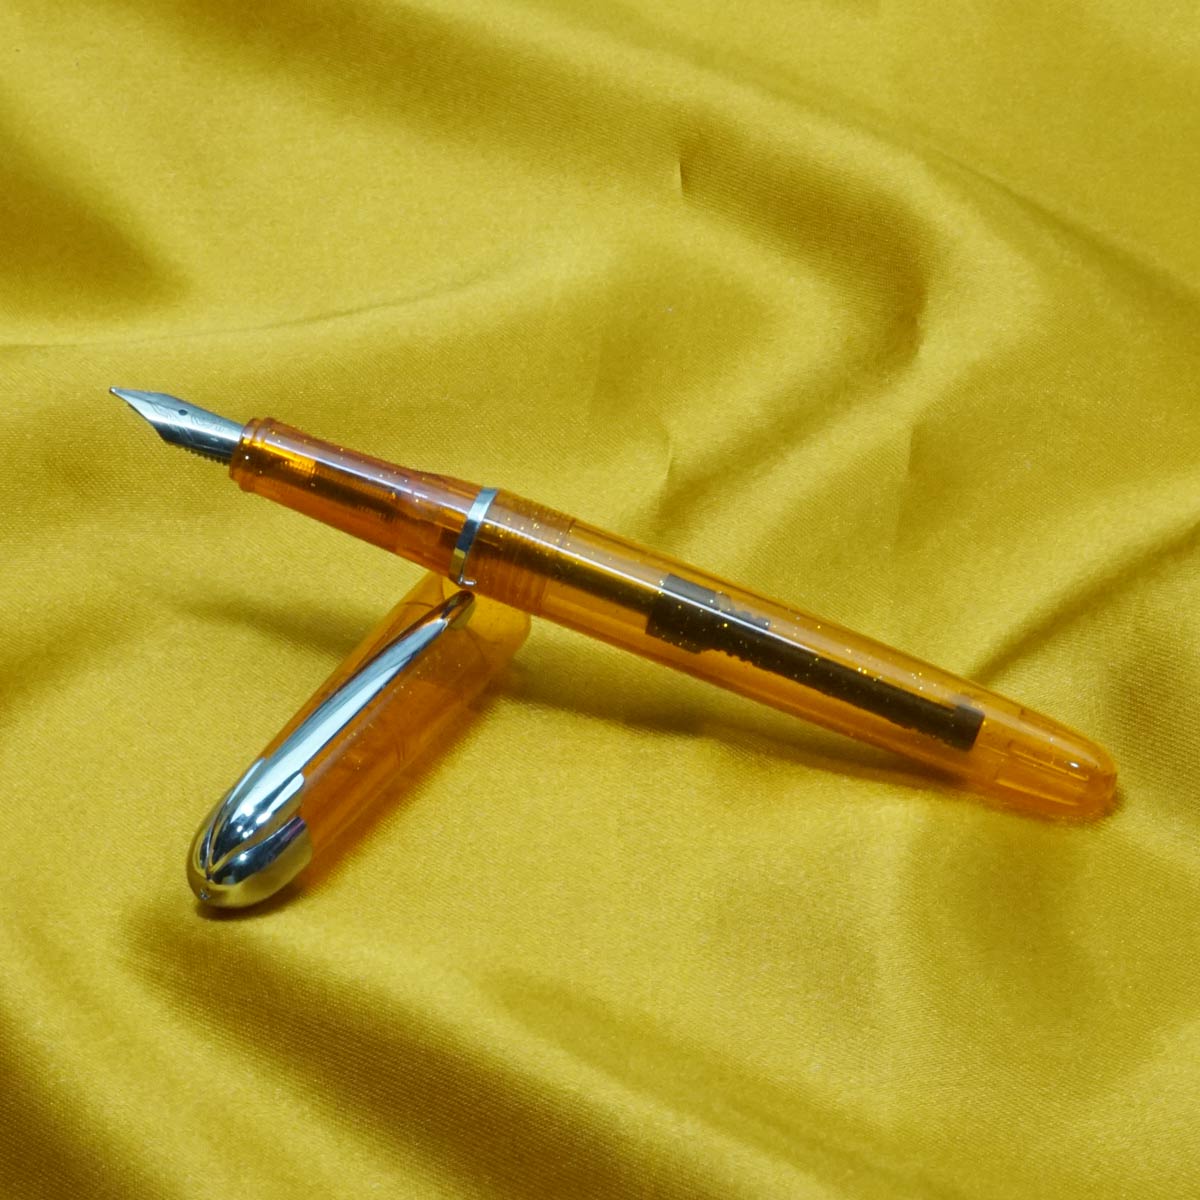 Hero FP8000 - Orange Color Transparent Body With Medium Nib Converter Type Fountain Pen SKU  20441